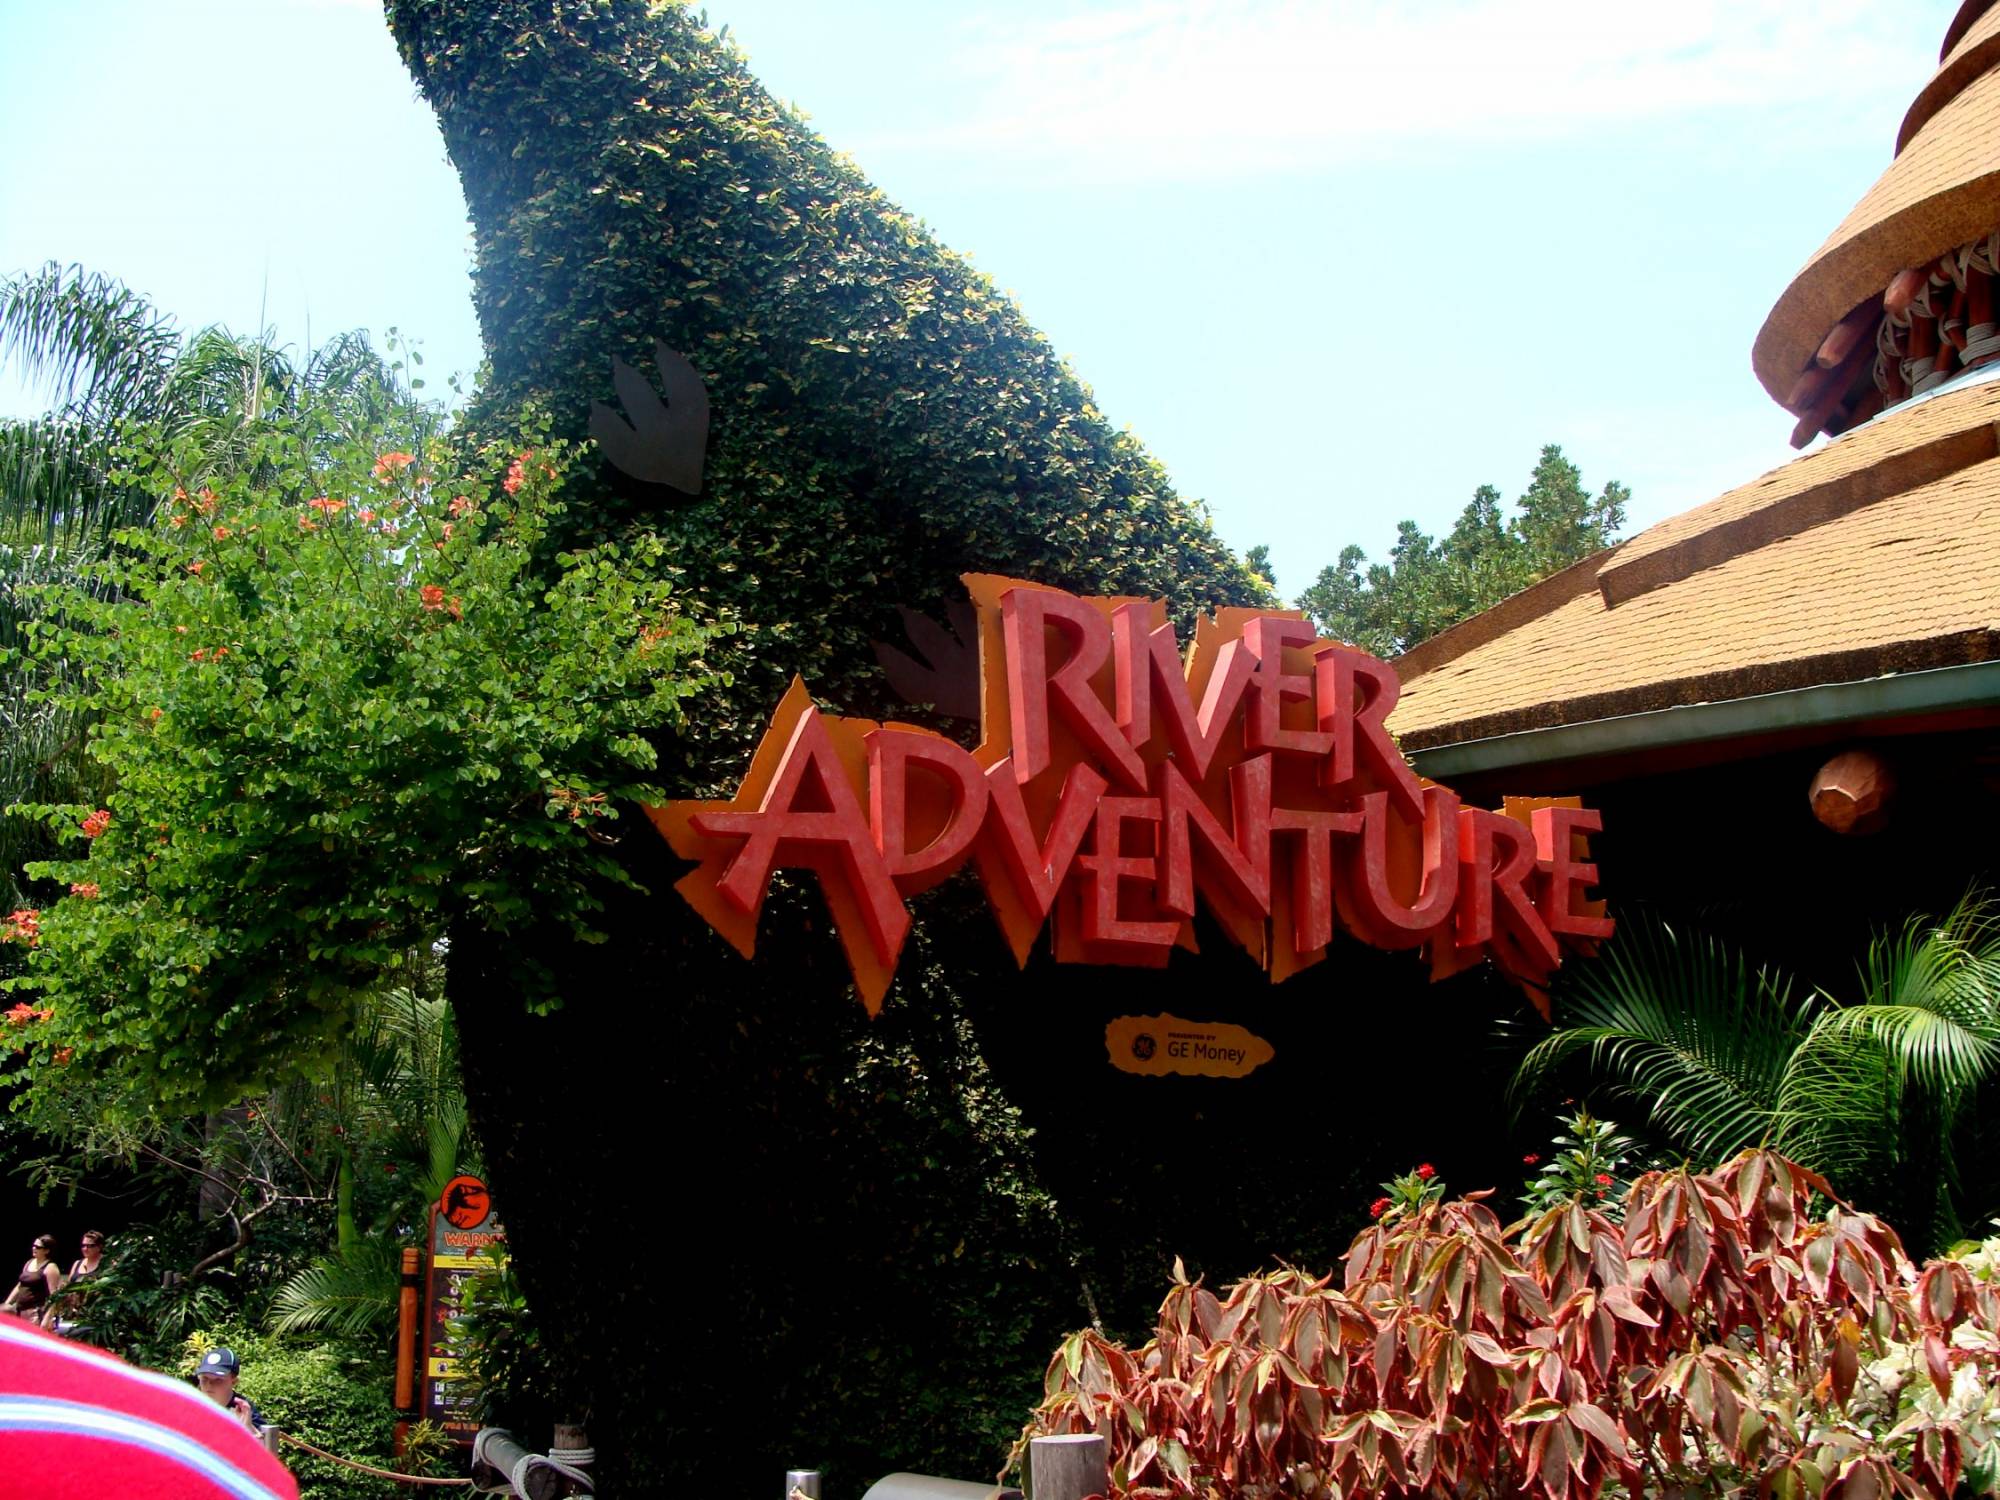 Jurassic Park River Adventure entrance sign